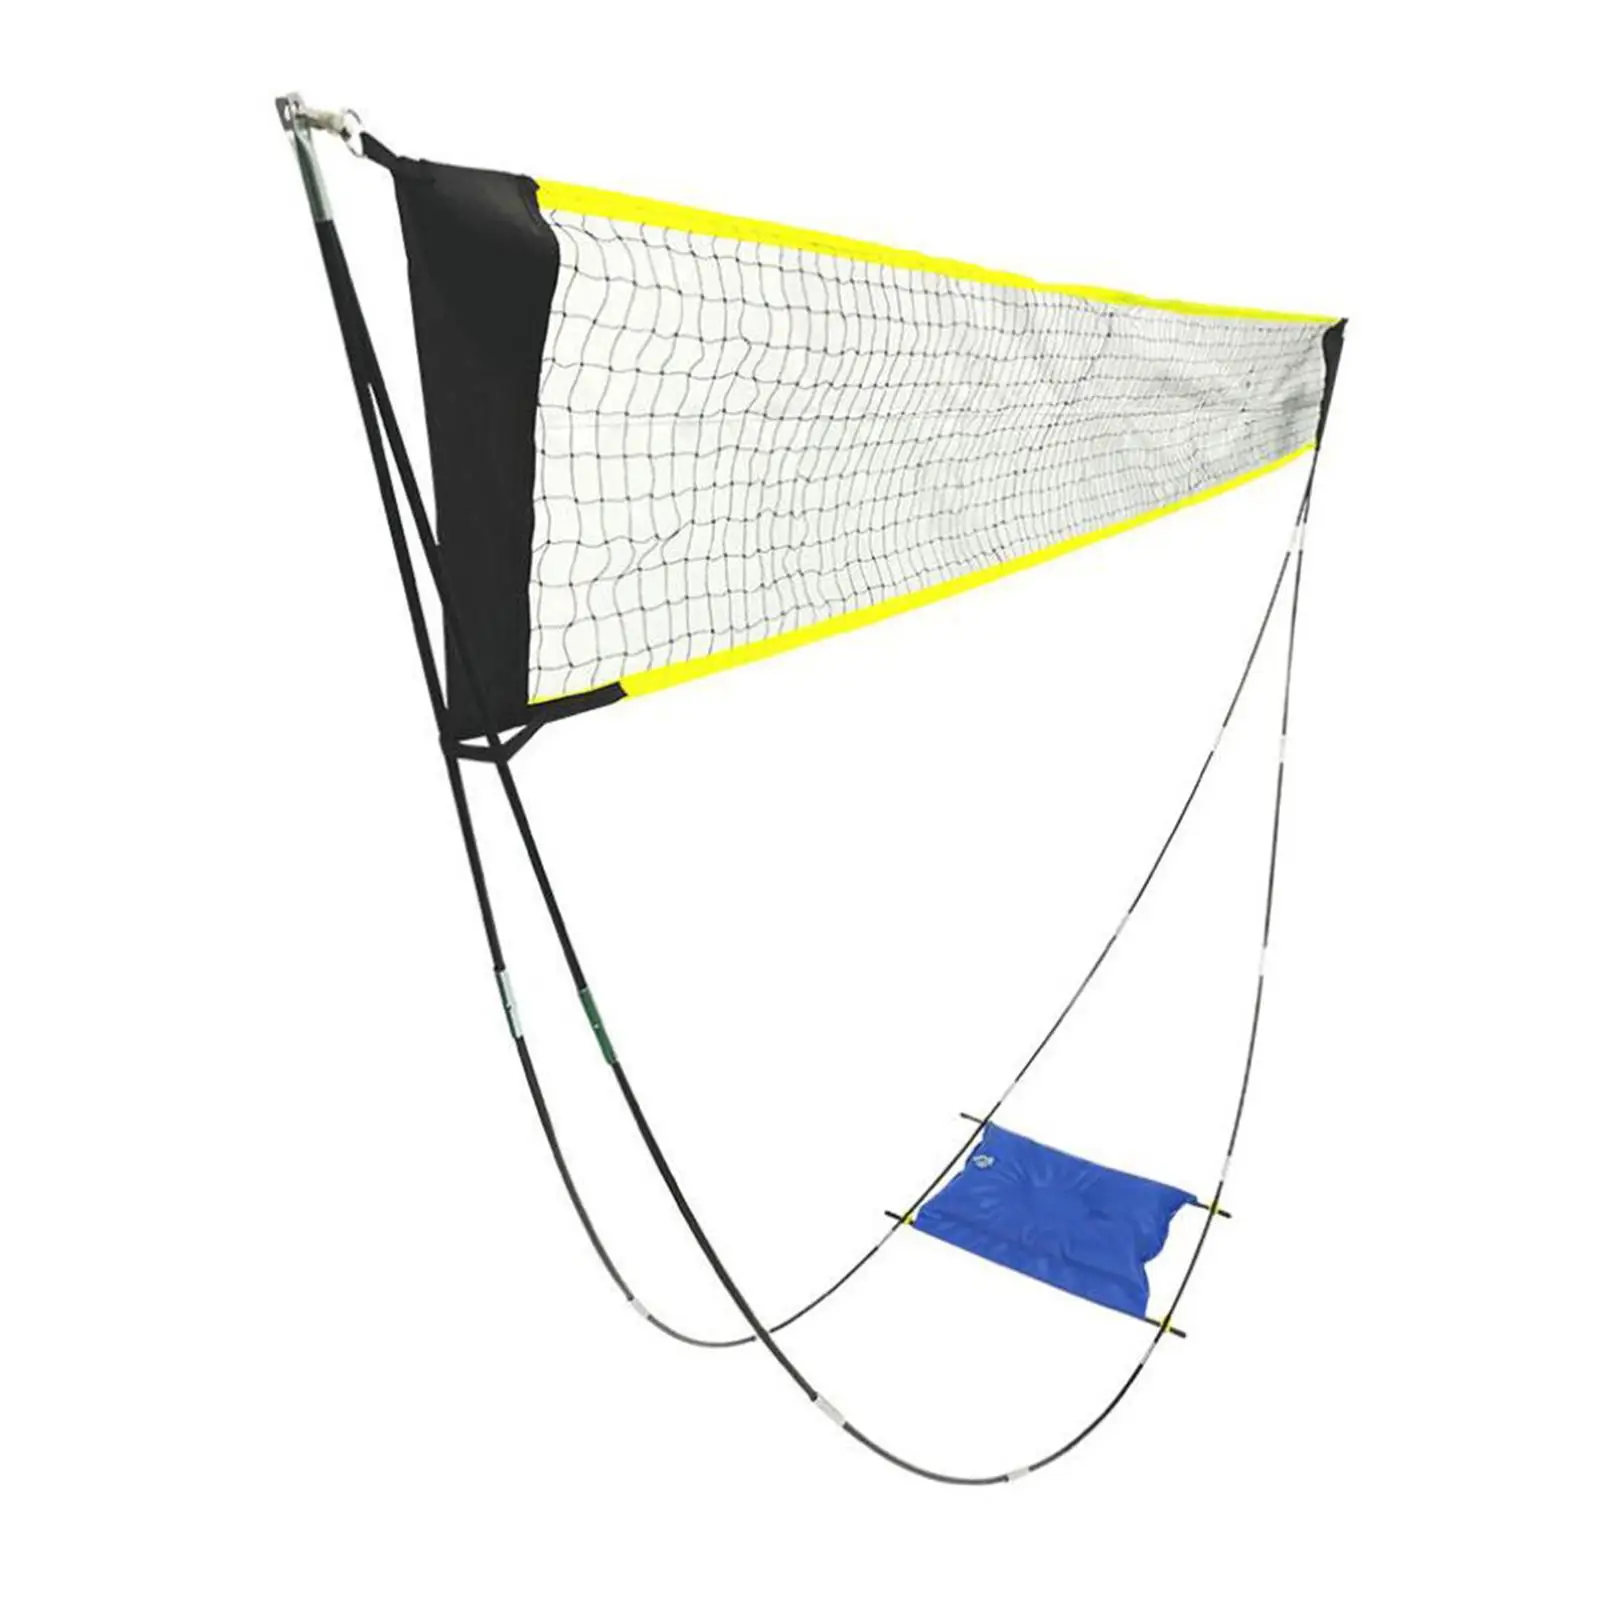 Badminton Net Set with Carry Bag Setup Sports Net Volleyball Net Backyard for Yard Indoor Outdoor Lawn Match Beach Games